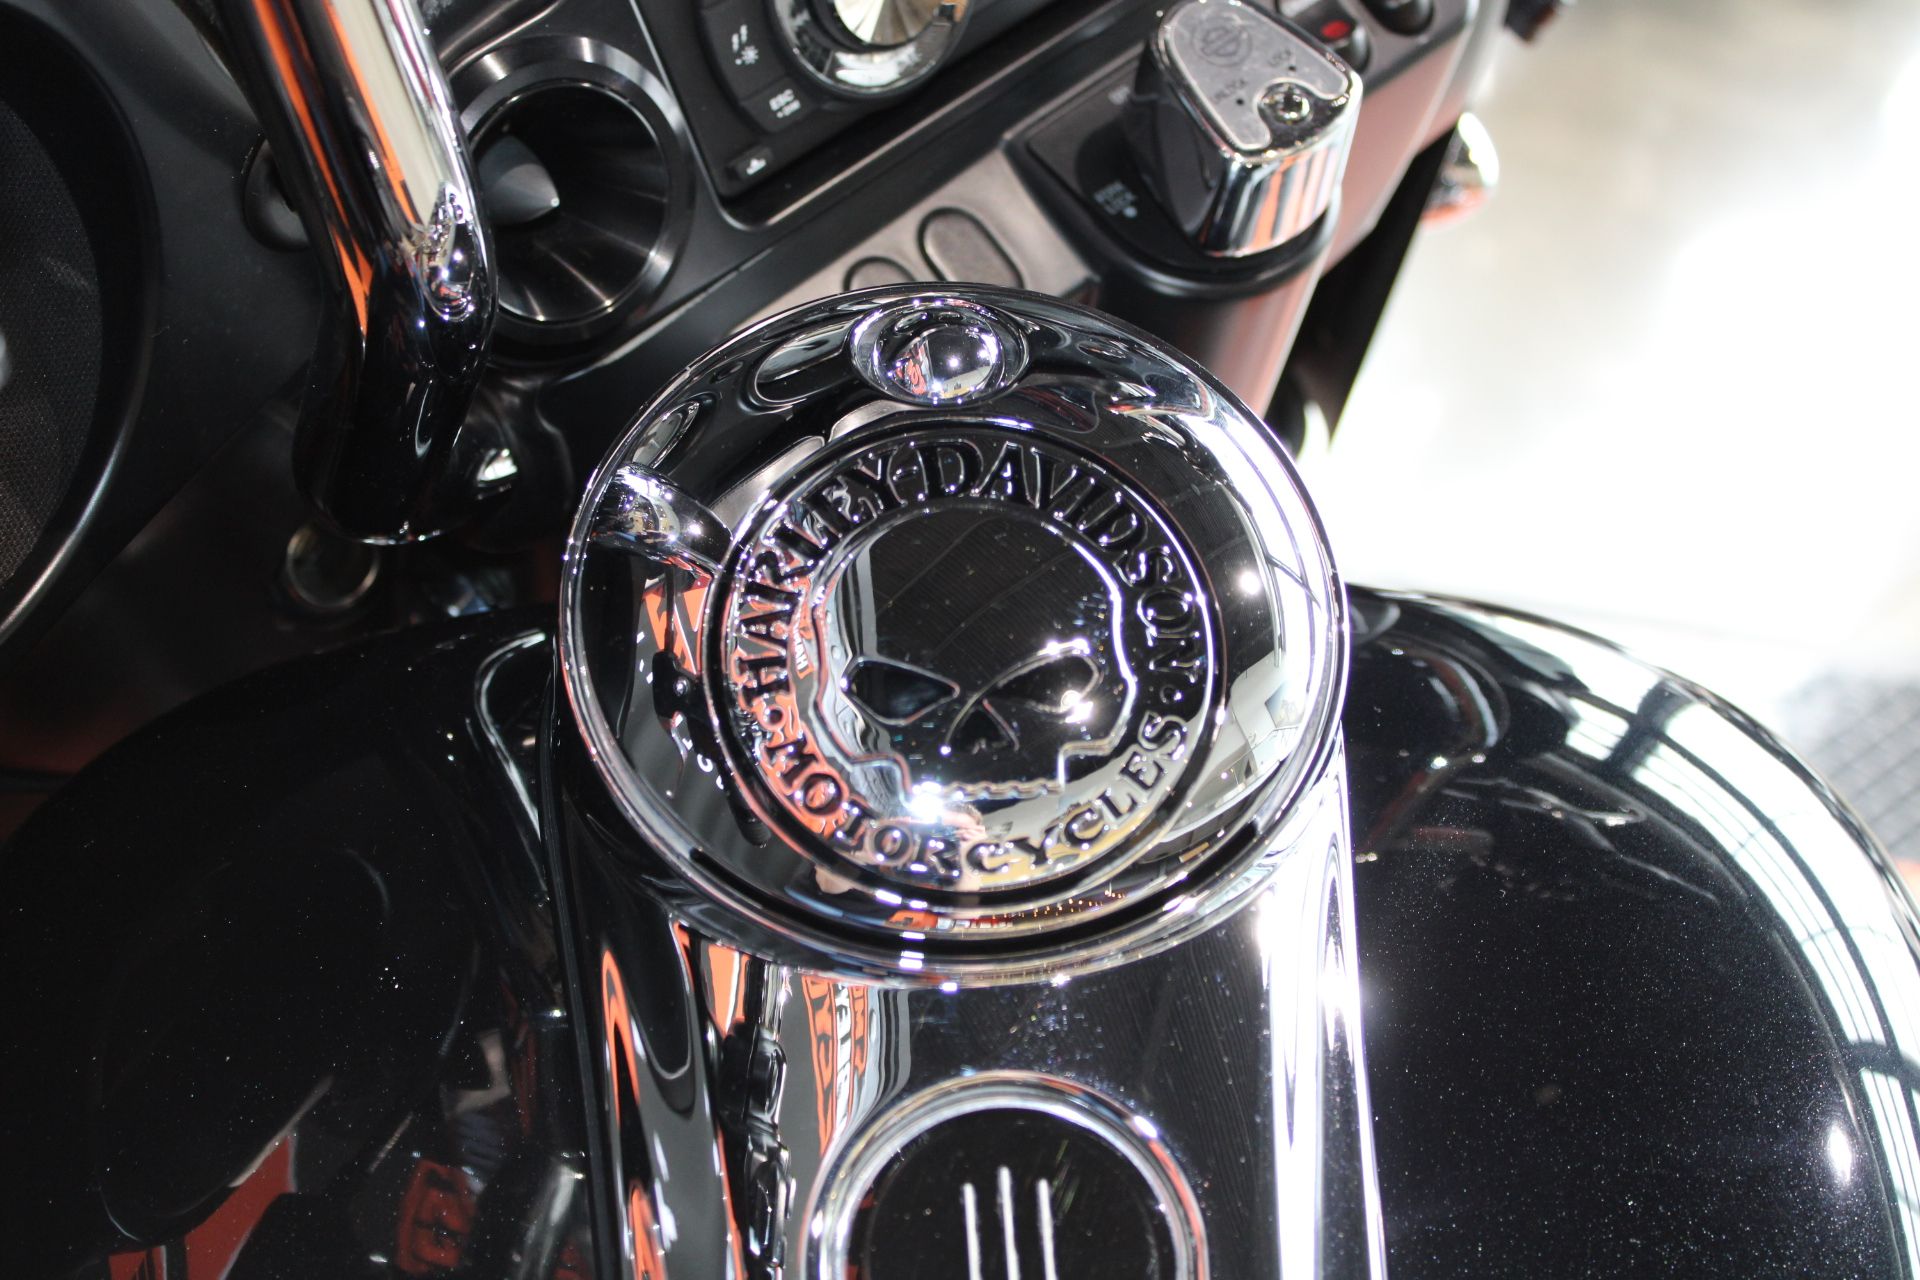 2013 Harley-Davidson Street Glide® in Shorewood, Illinois - Photo 10